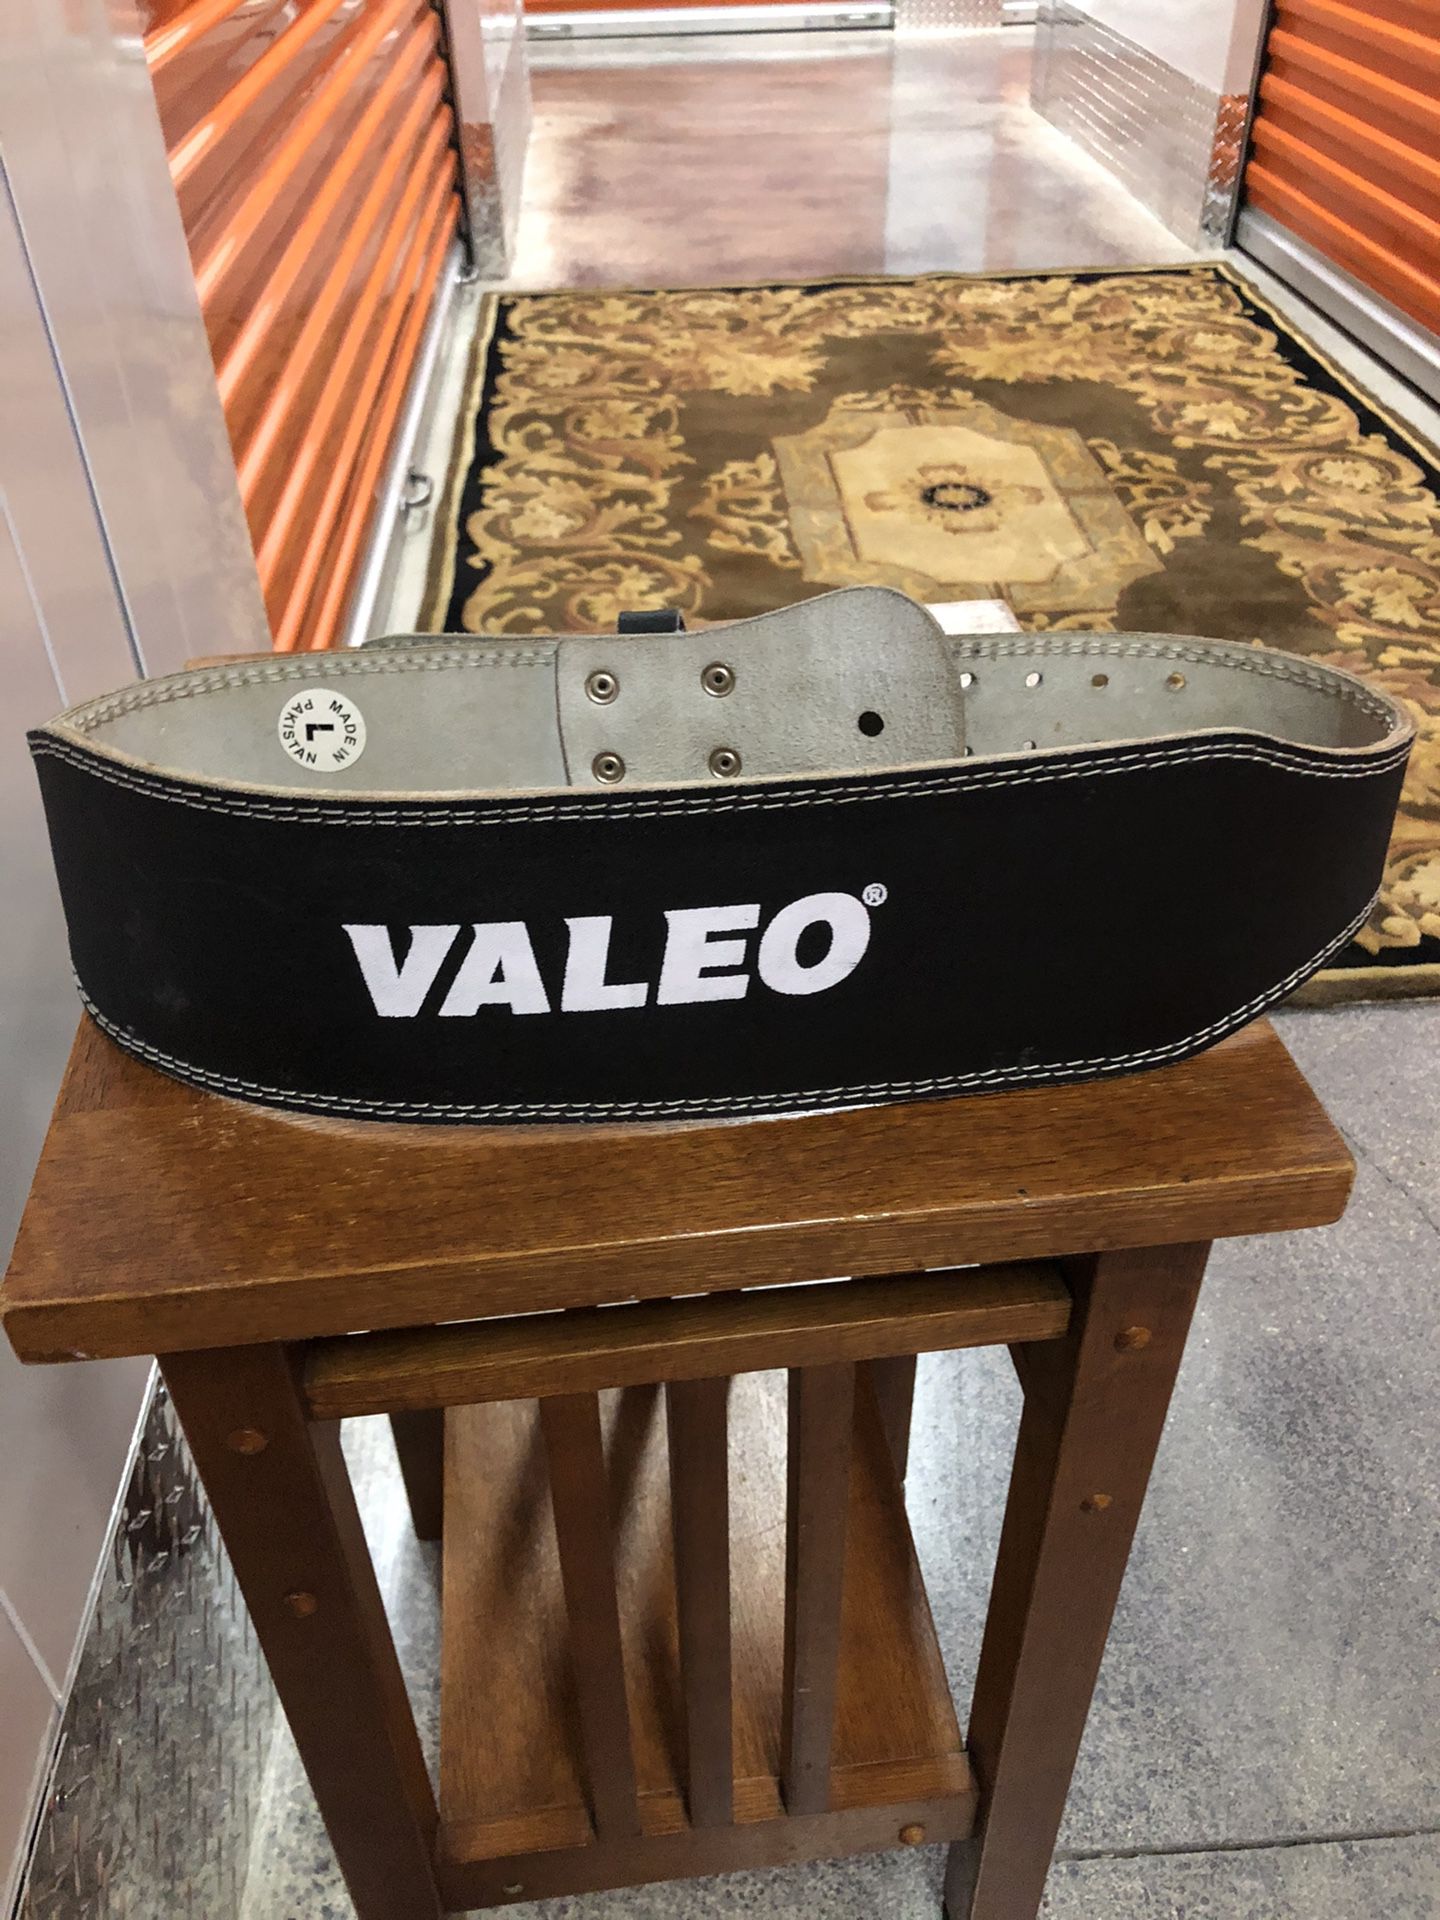 Workout belt valeo